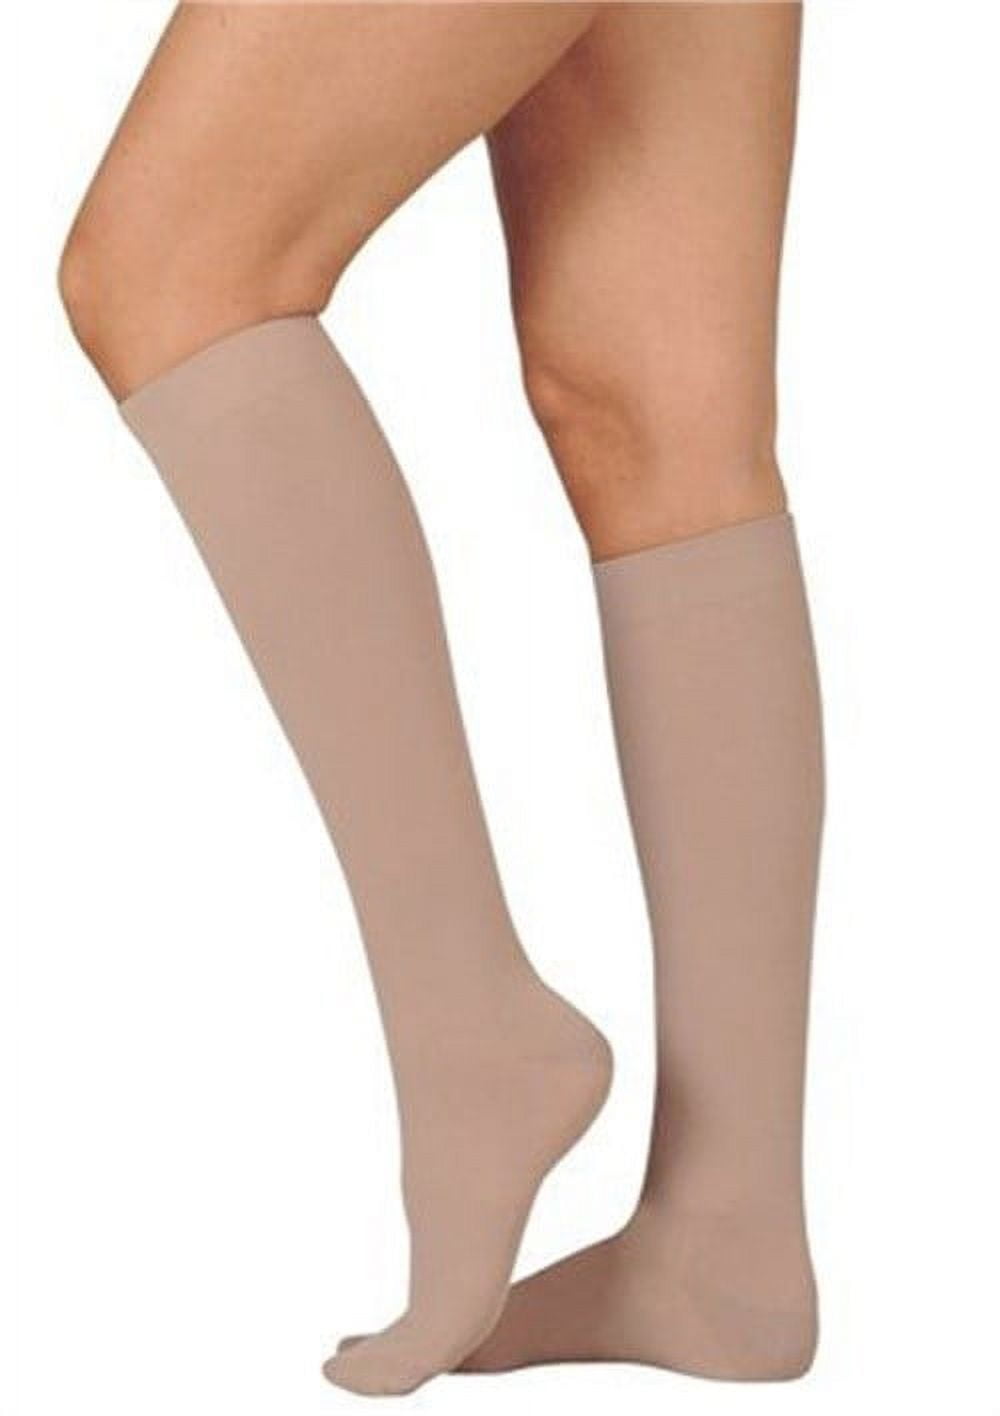 Zipper Compression Socks - Open Toe Knee High Graduated Pressure Support  Hose for Improved Leg Circulation - Unisex - White Large Size - 5 Star  Super Deals 